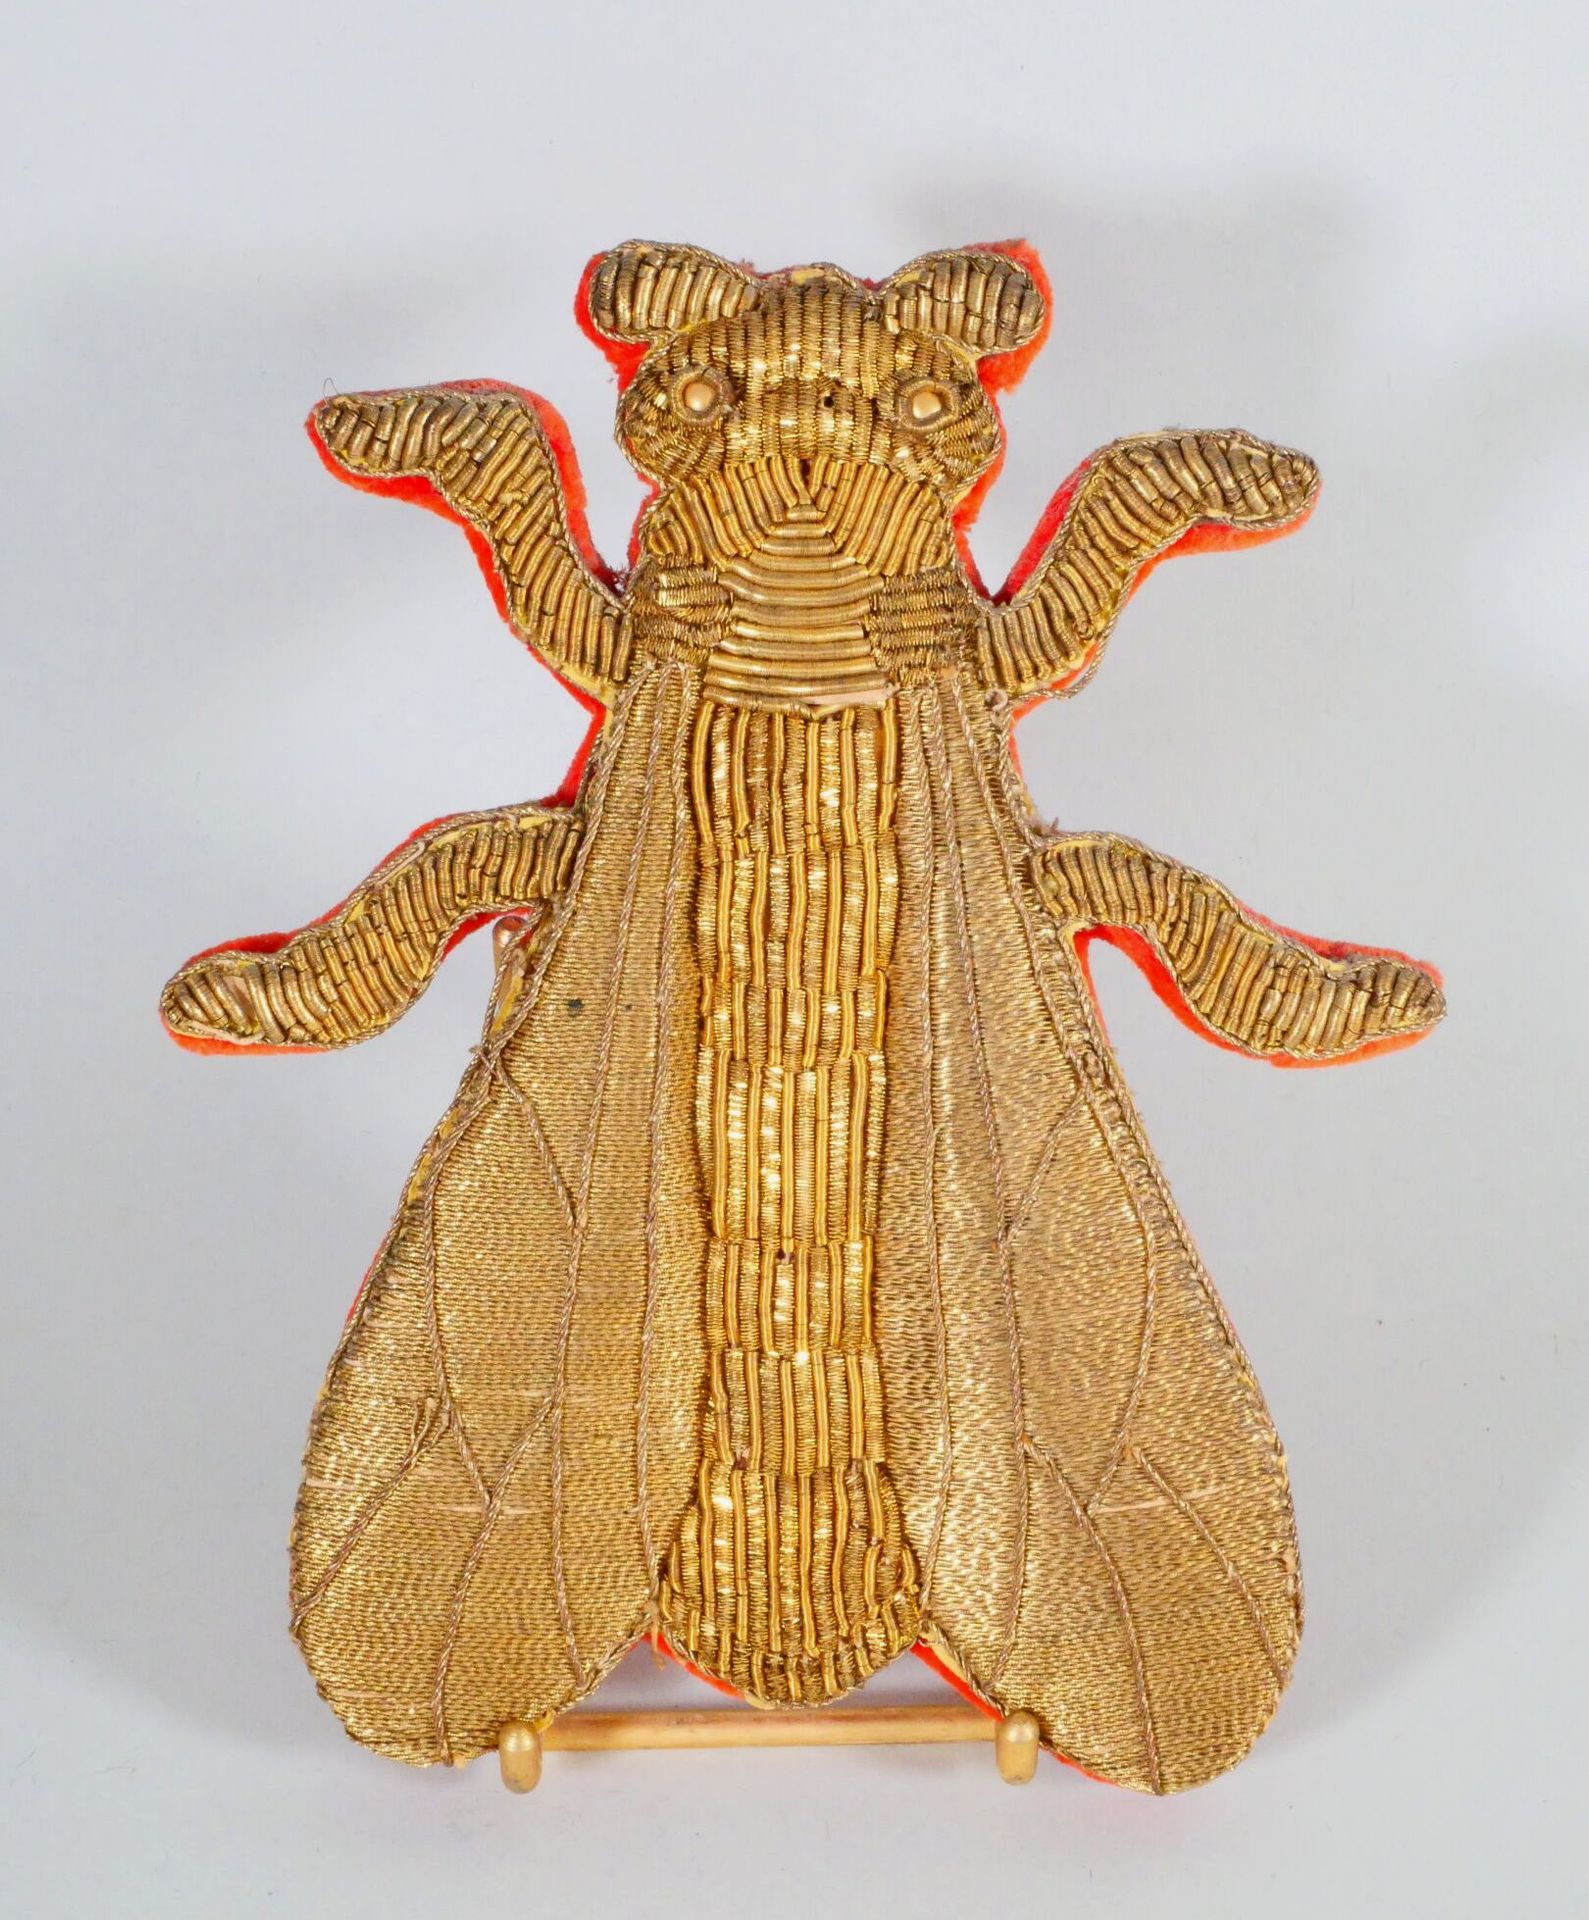 Null 用金线和cannetille刺绣面对蜜蜂。安装在一个铺有红色天鹅绒的底座上。19世纪初 高温：15.5厘米

专家 : Gaetan BRUNEL -&hellip;